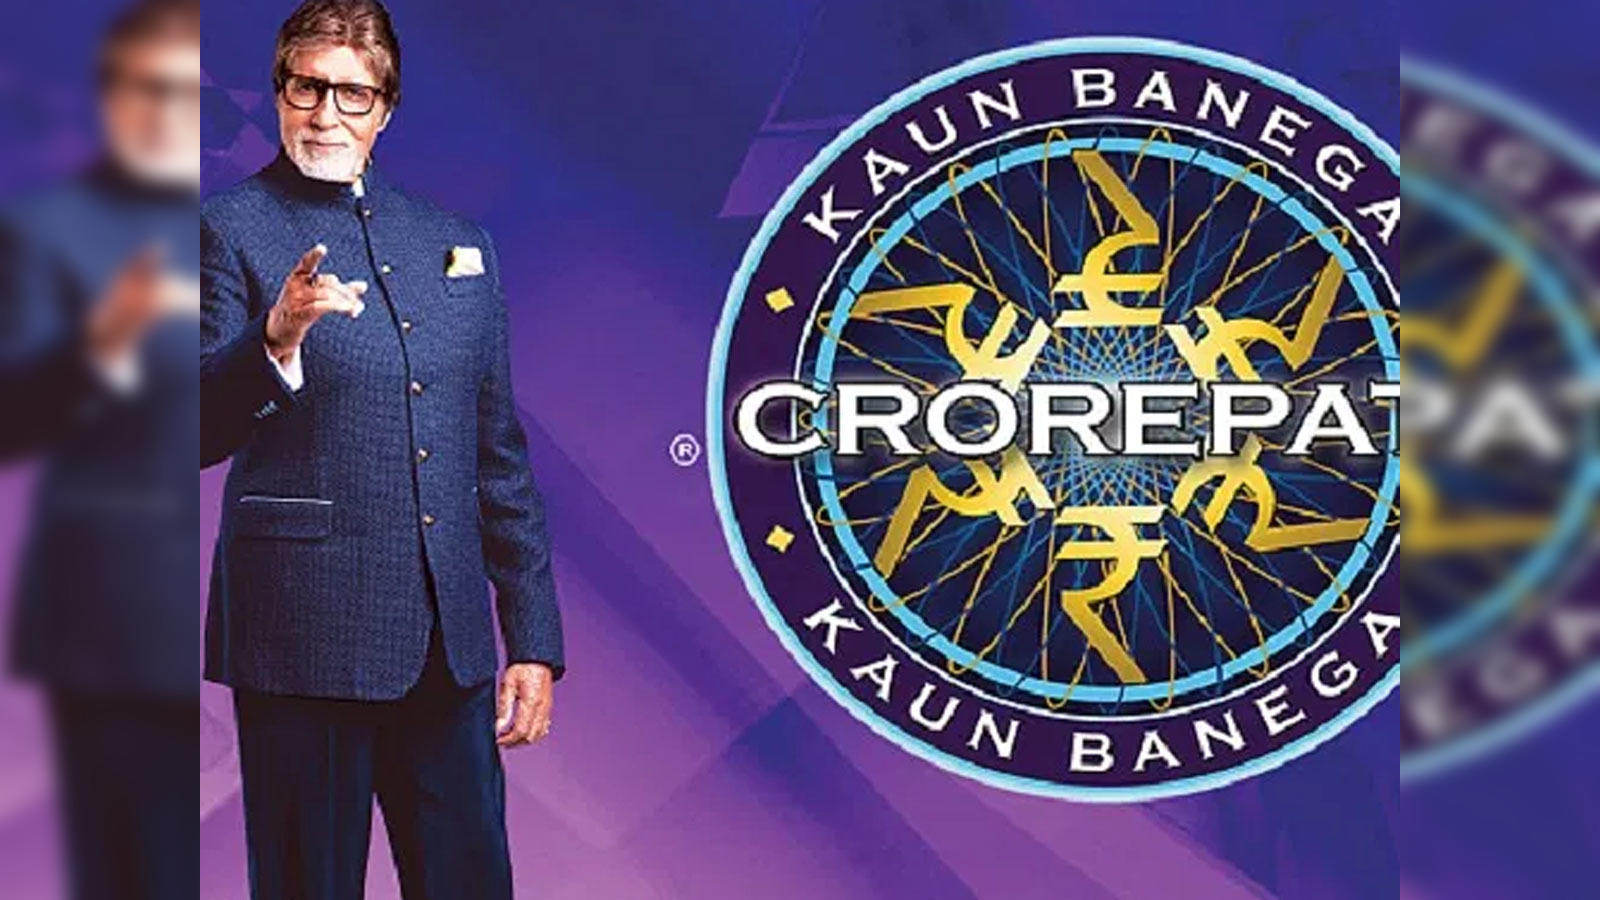 Kaun Banega Crorepati lottery: Latest Articles, Scam alerts, Brand Updates  on Kaun Banega Crorepati lottery